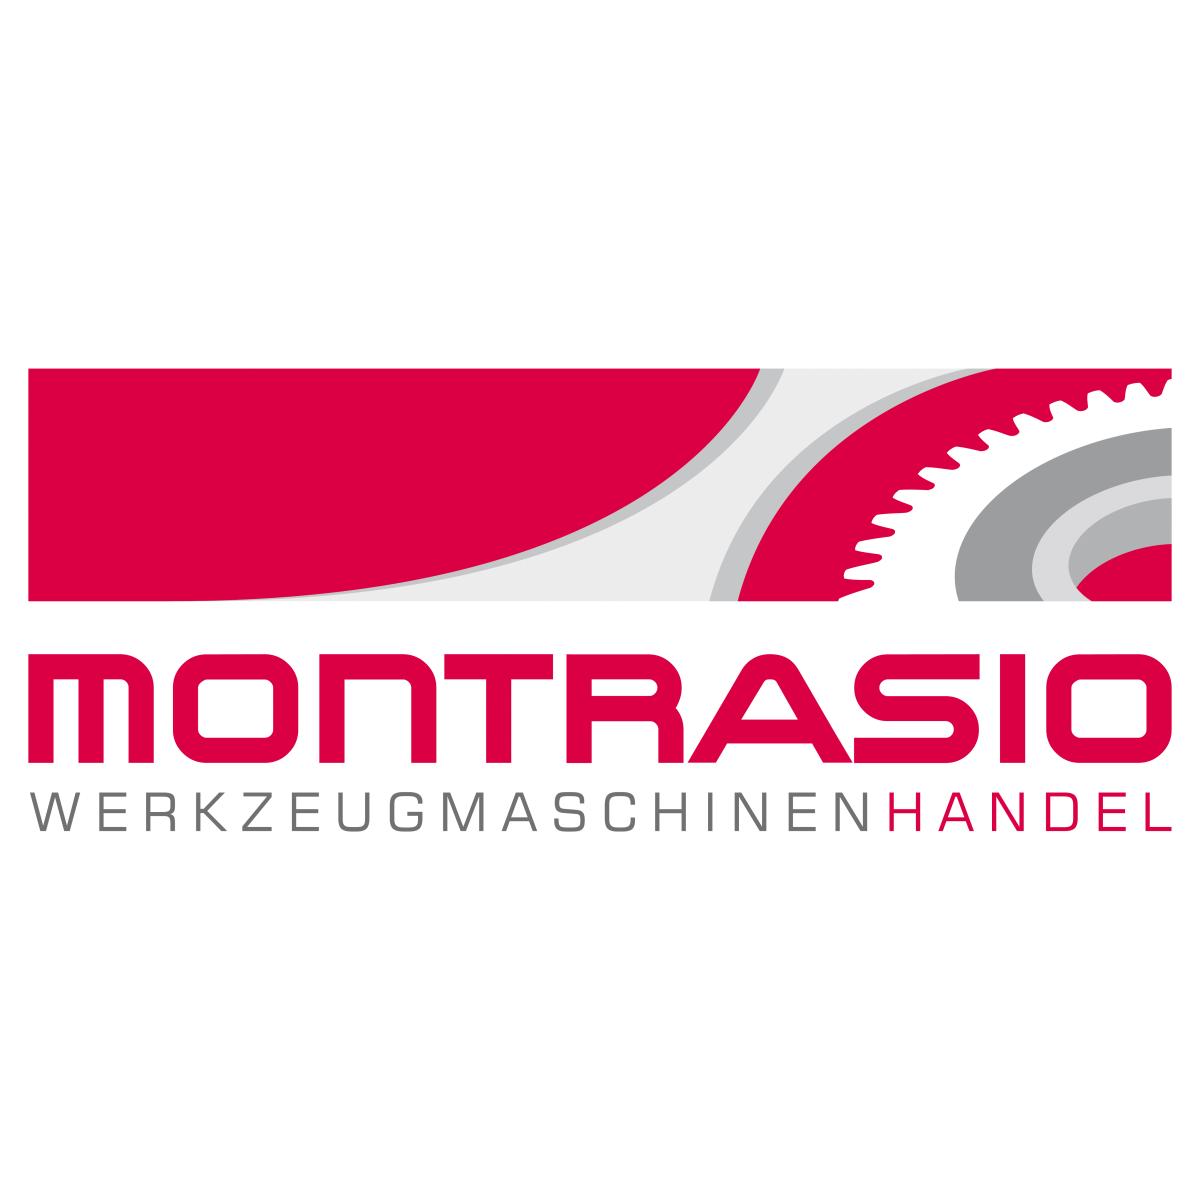 Montrasio GmbH